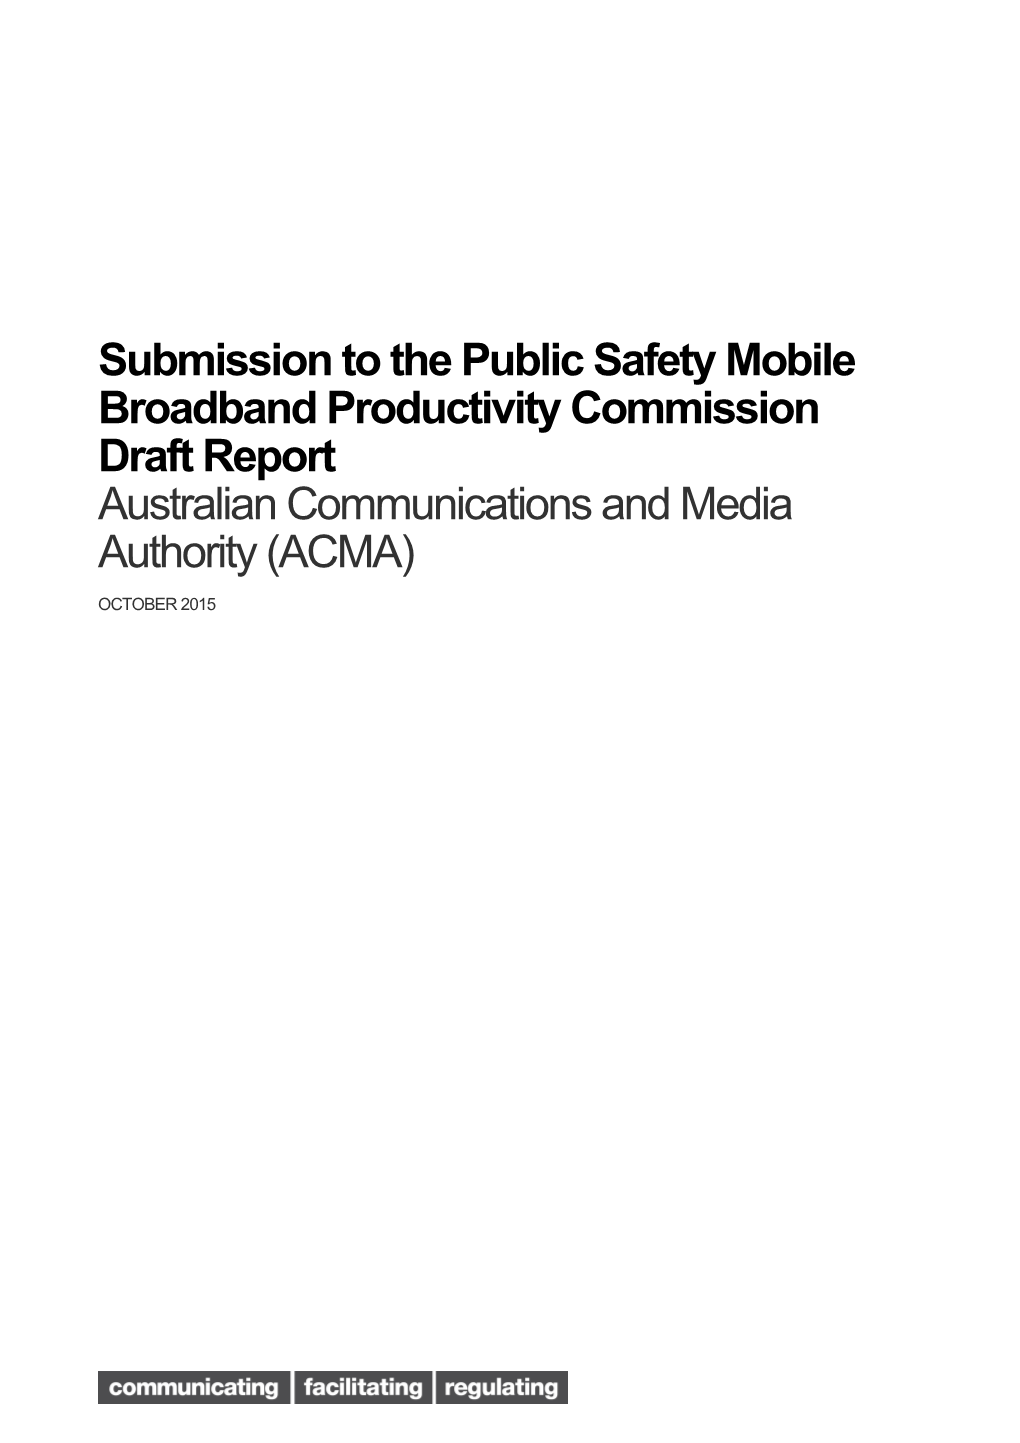 Subdr35 - Australian Communications and Media Authority (ACMA) - Public Safety Mobile Broadband